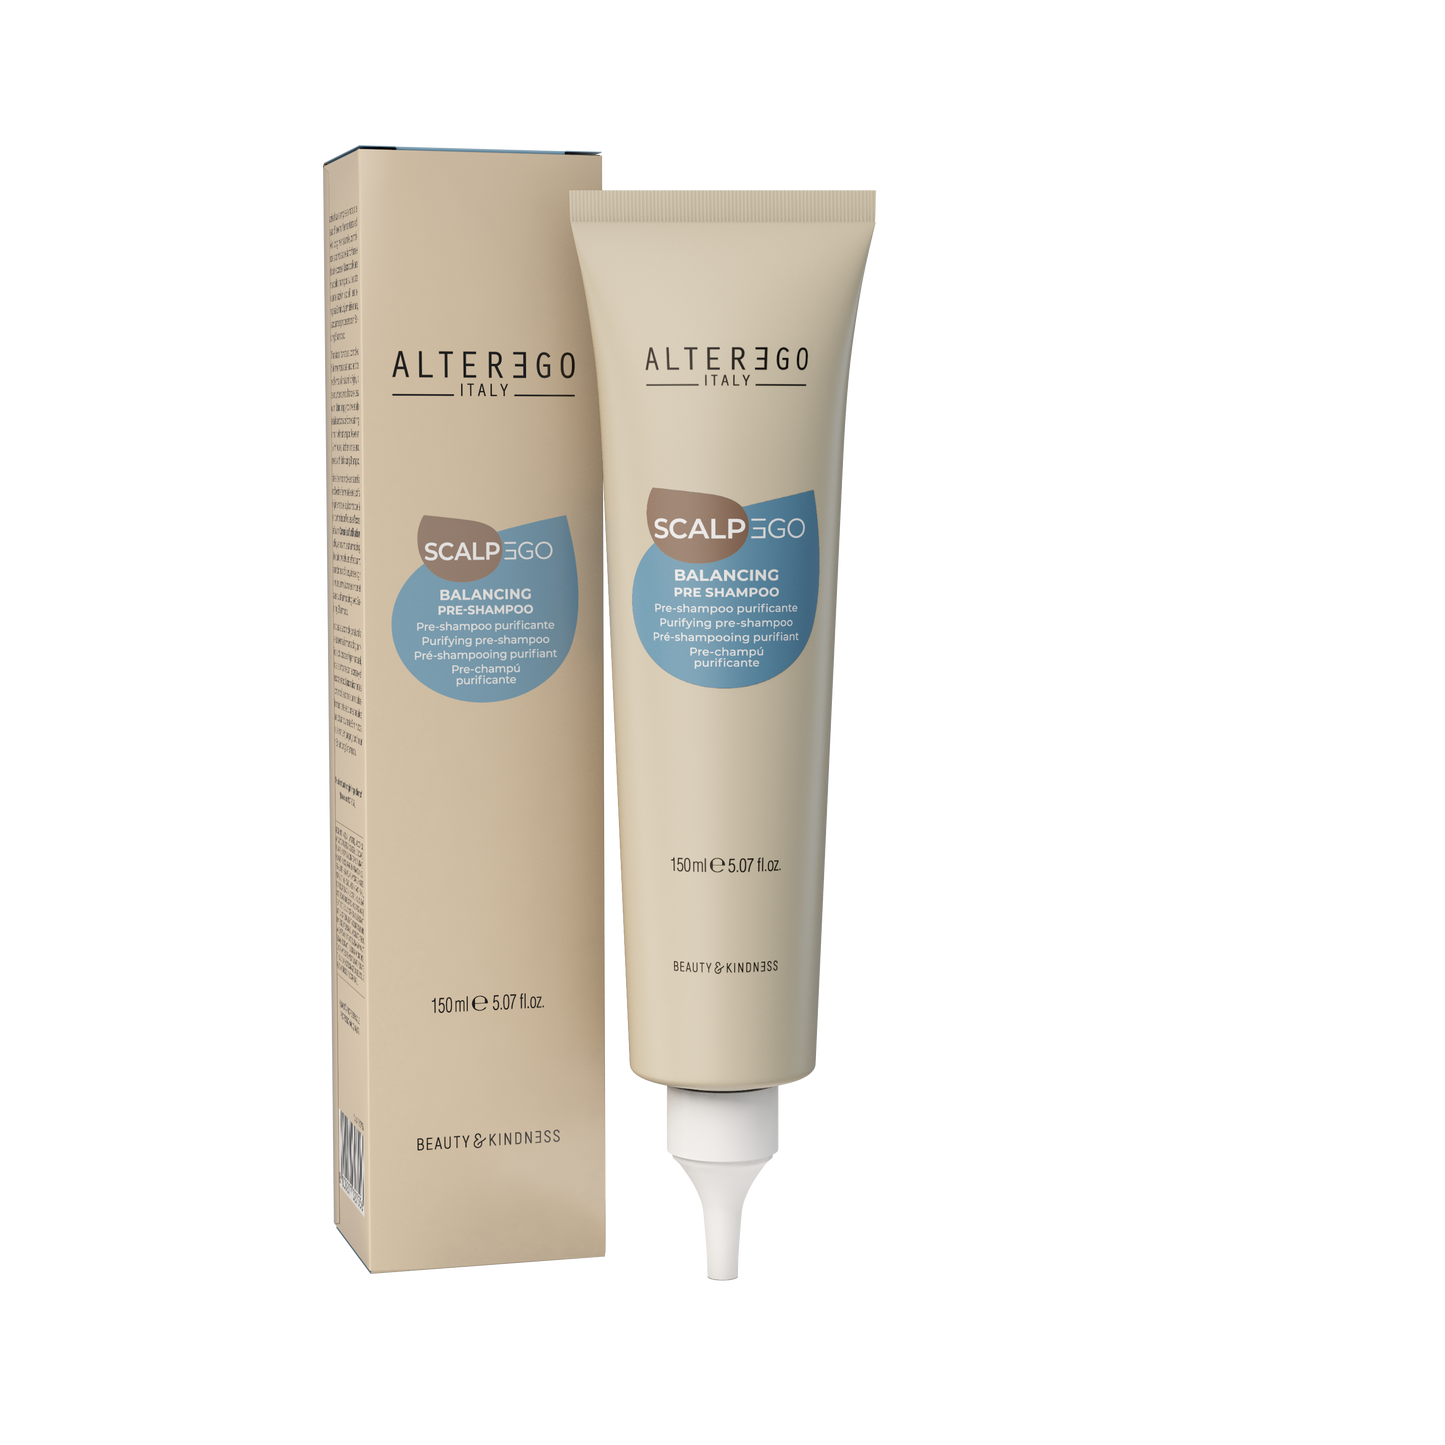 Scalpego Pre Shampoo Balancing Treatment